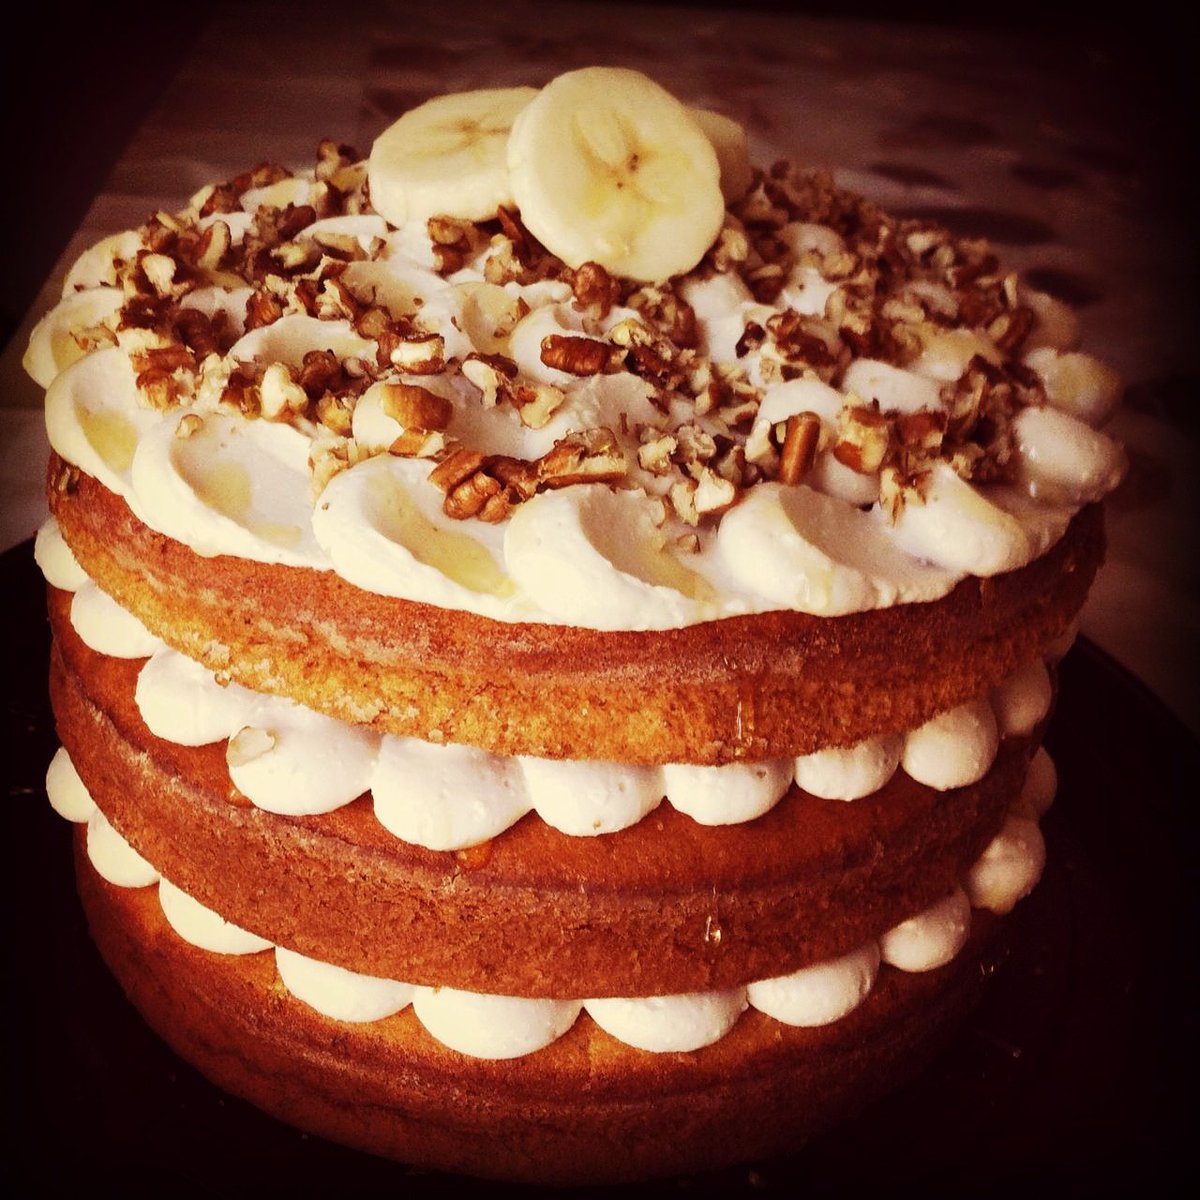 Banana nude Cake #bananacake #cake #nude #vintagecake